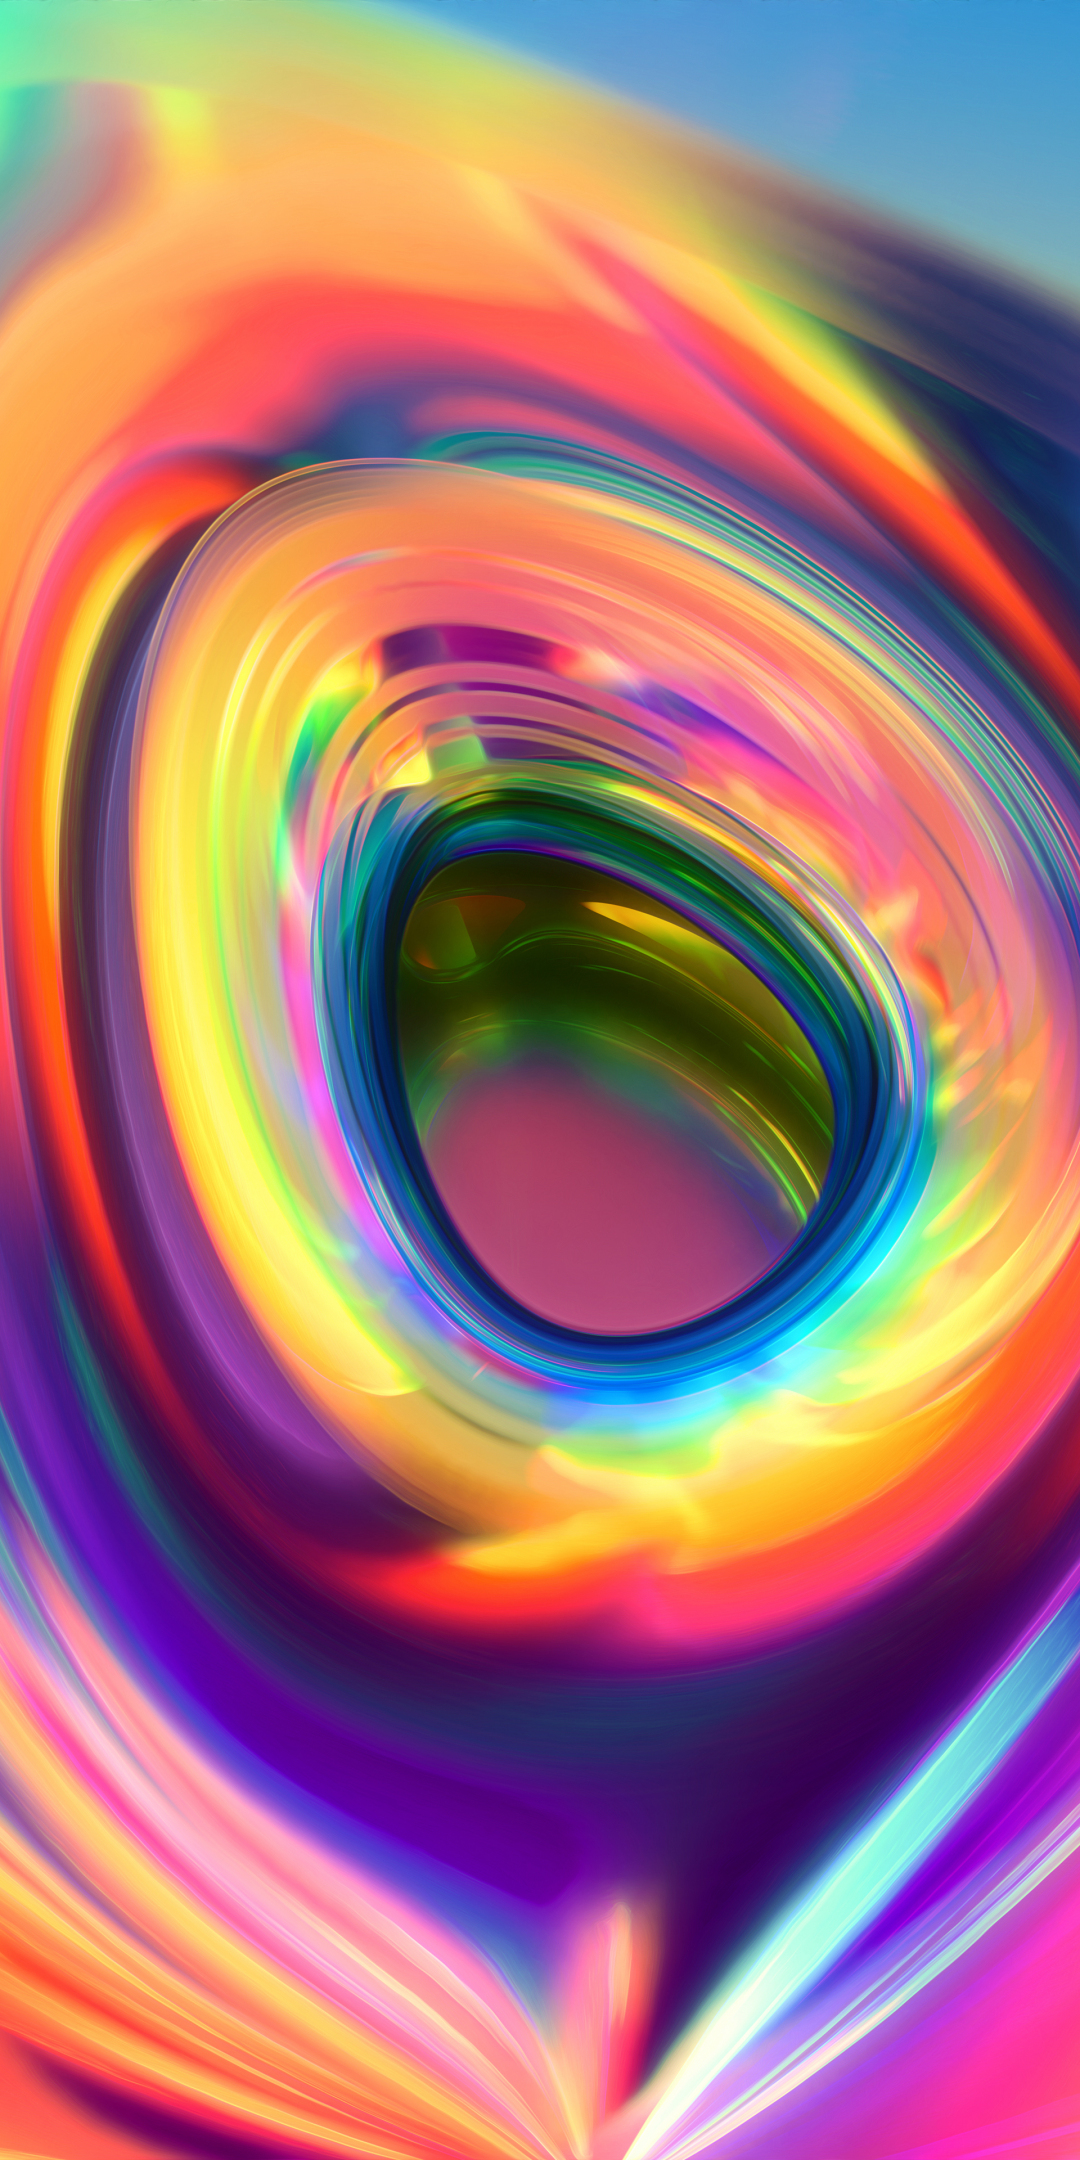 Circles, rings, colorful, 1080x2160 wallpaper